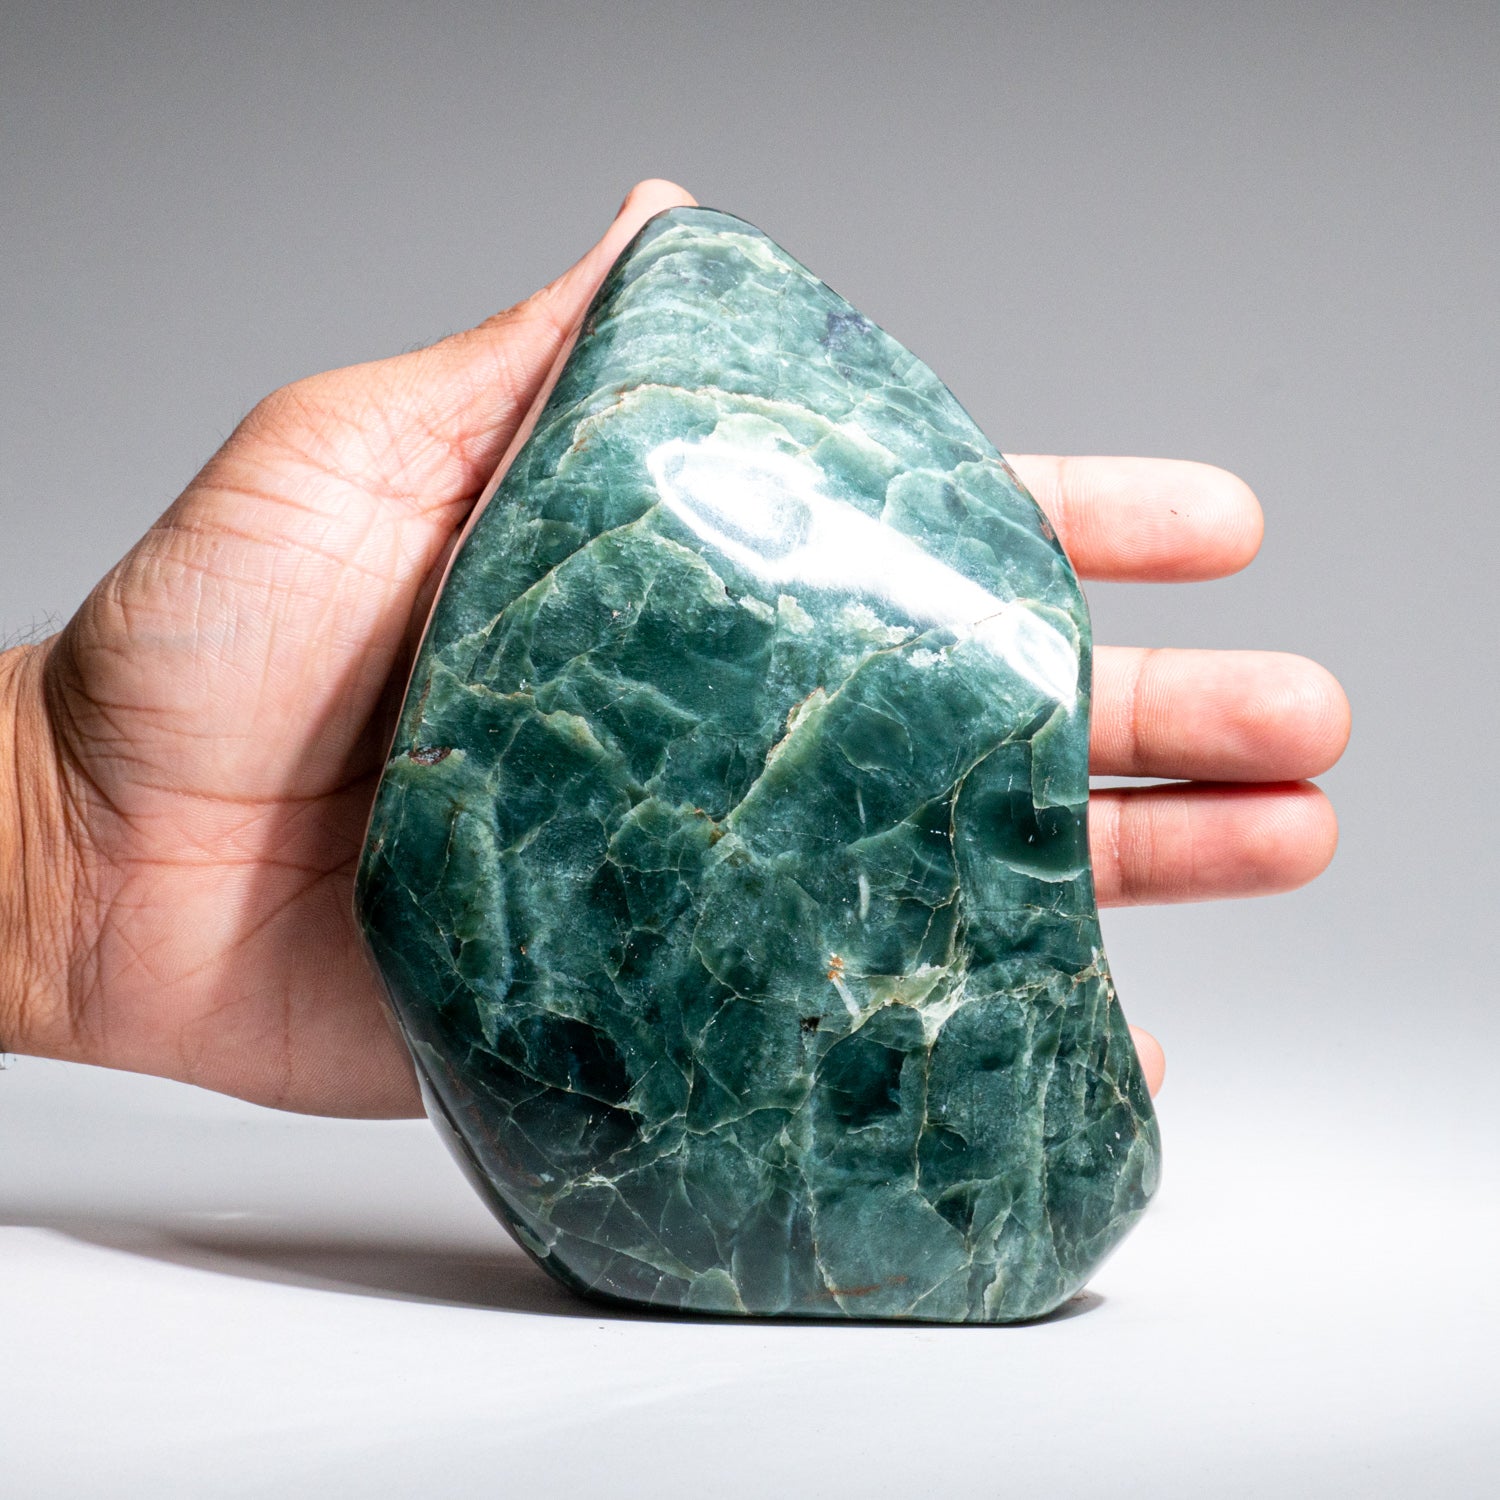 Polished Nephrite Jade Freeform from Pakistan (2.4 lbs)